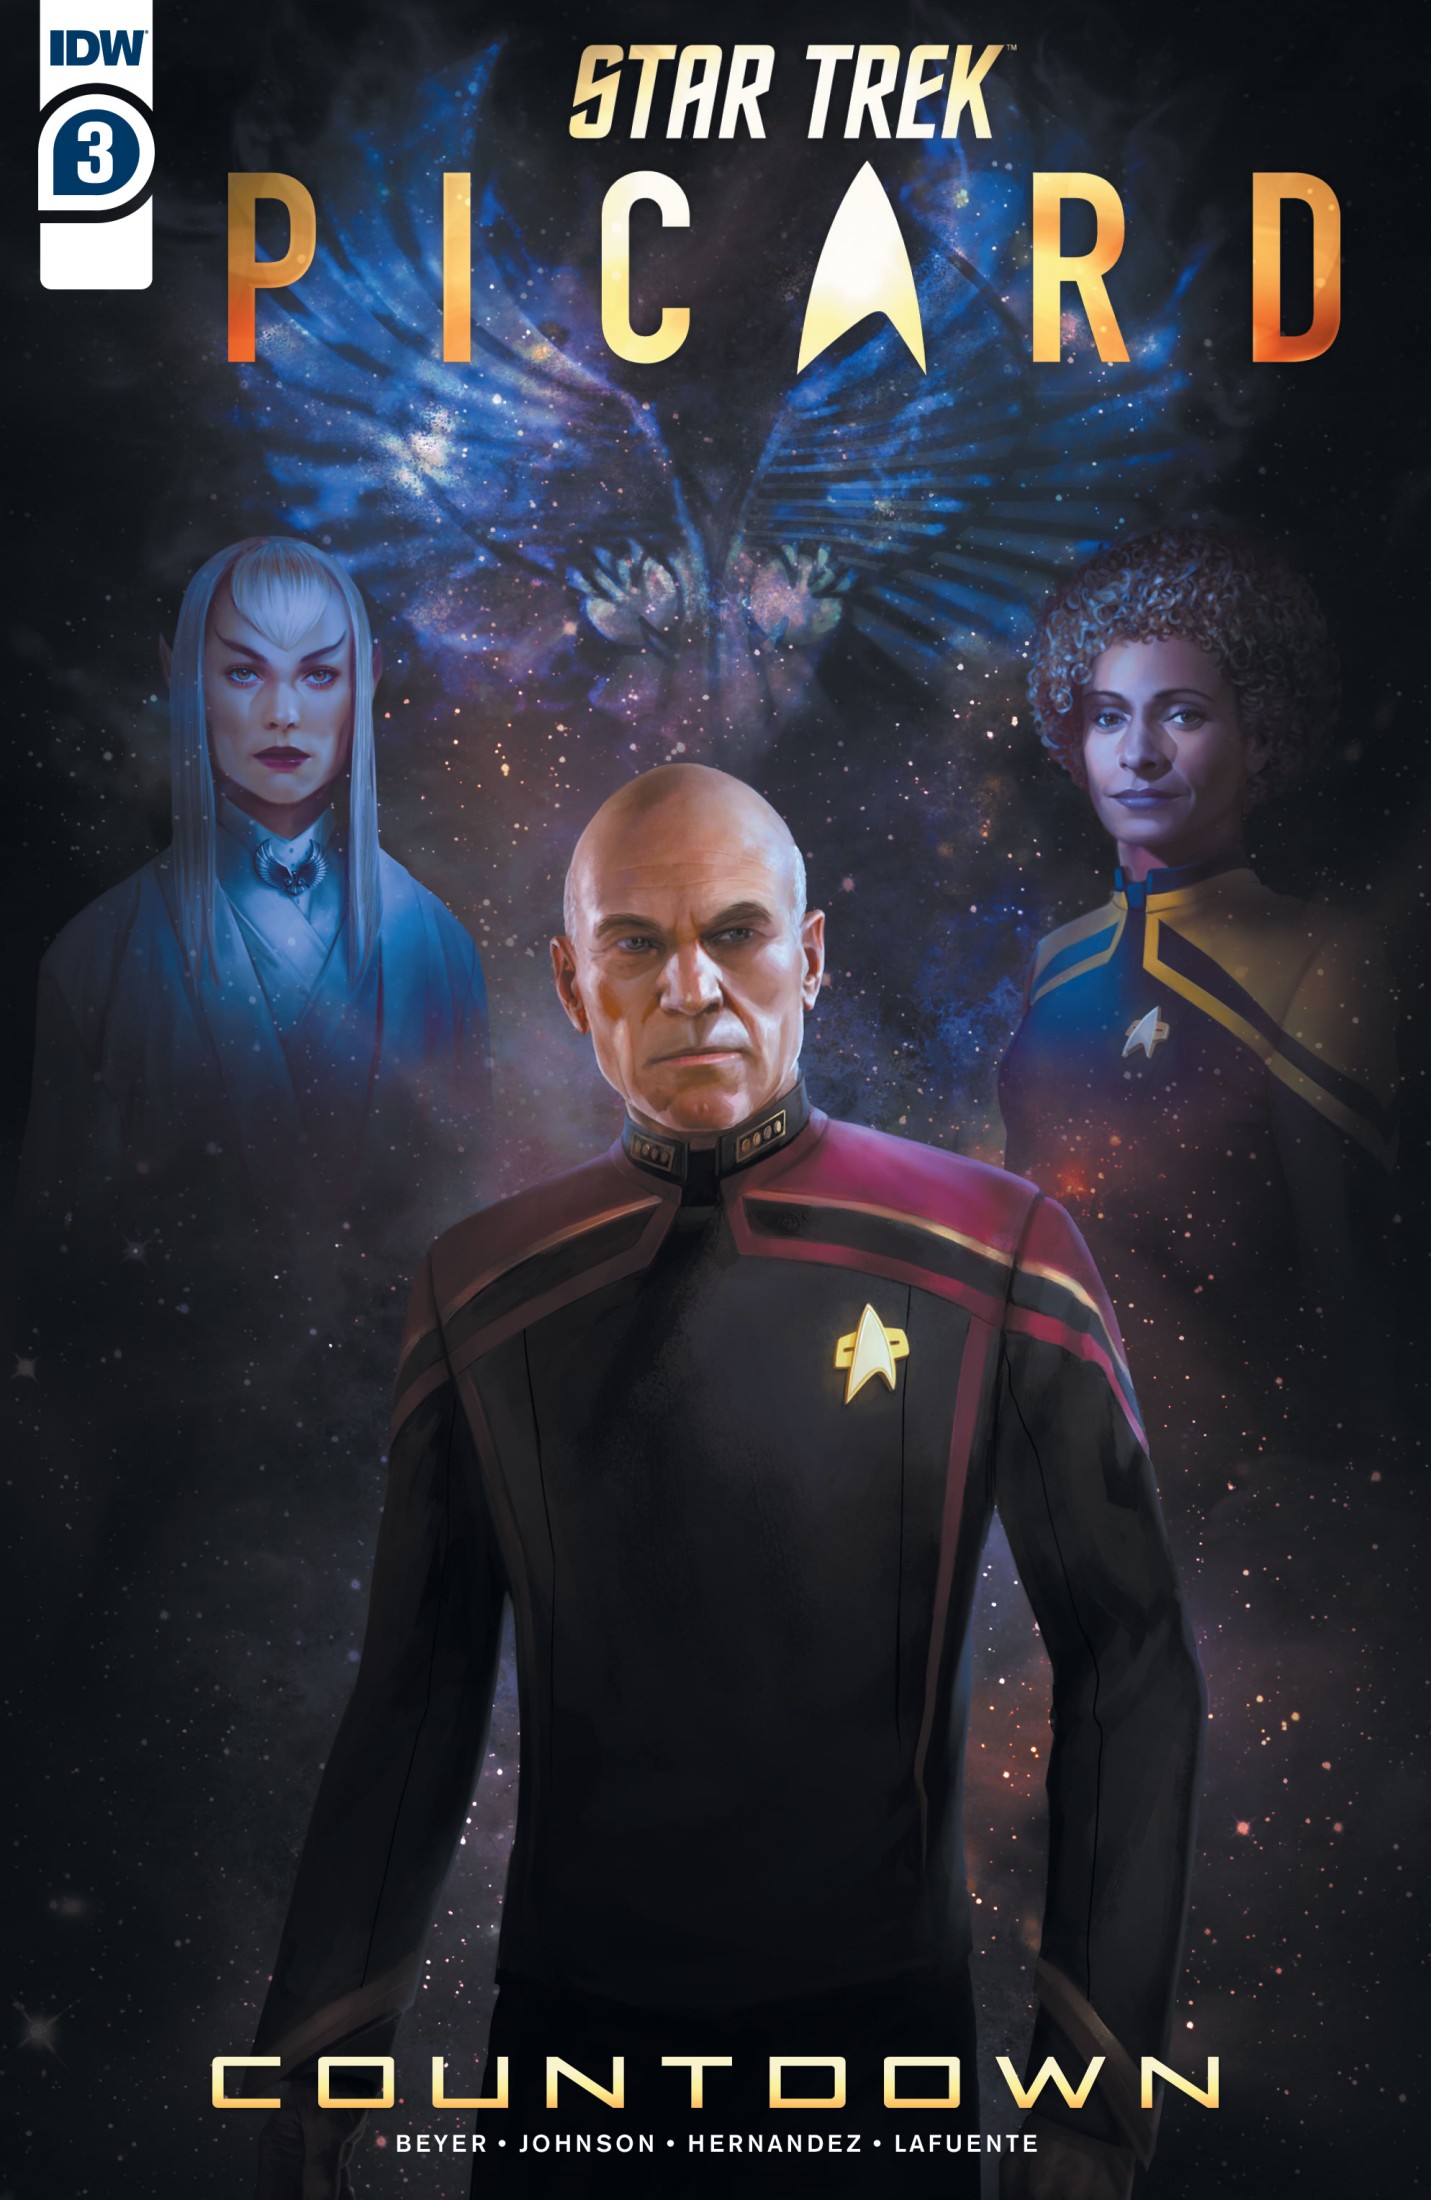 Star Trek: Picard - Countdown #3